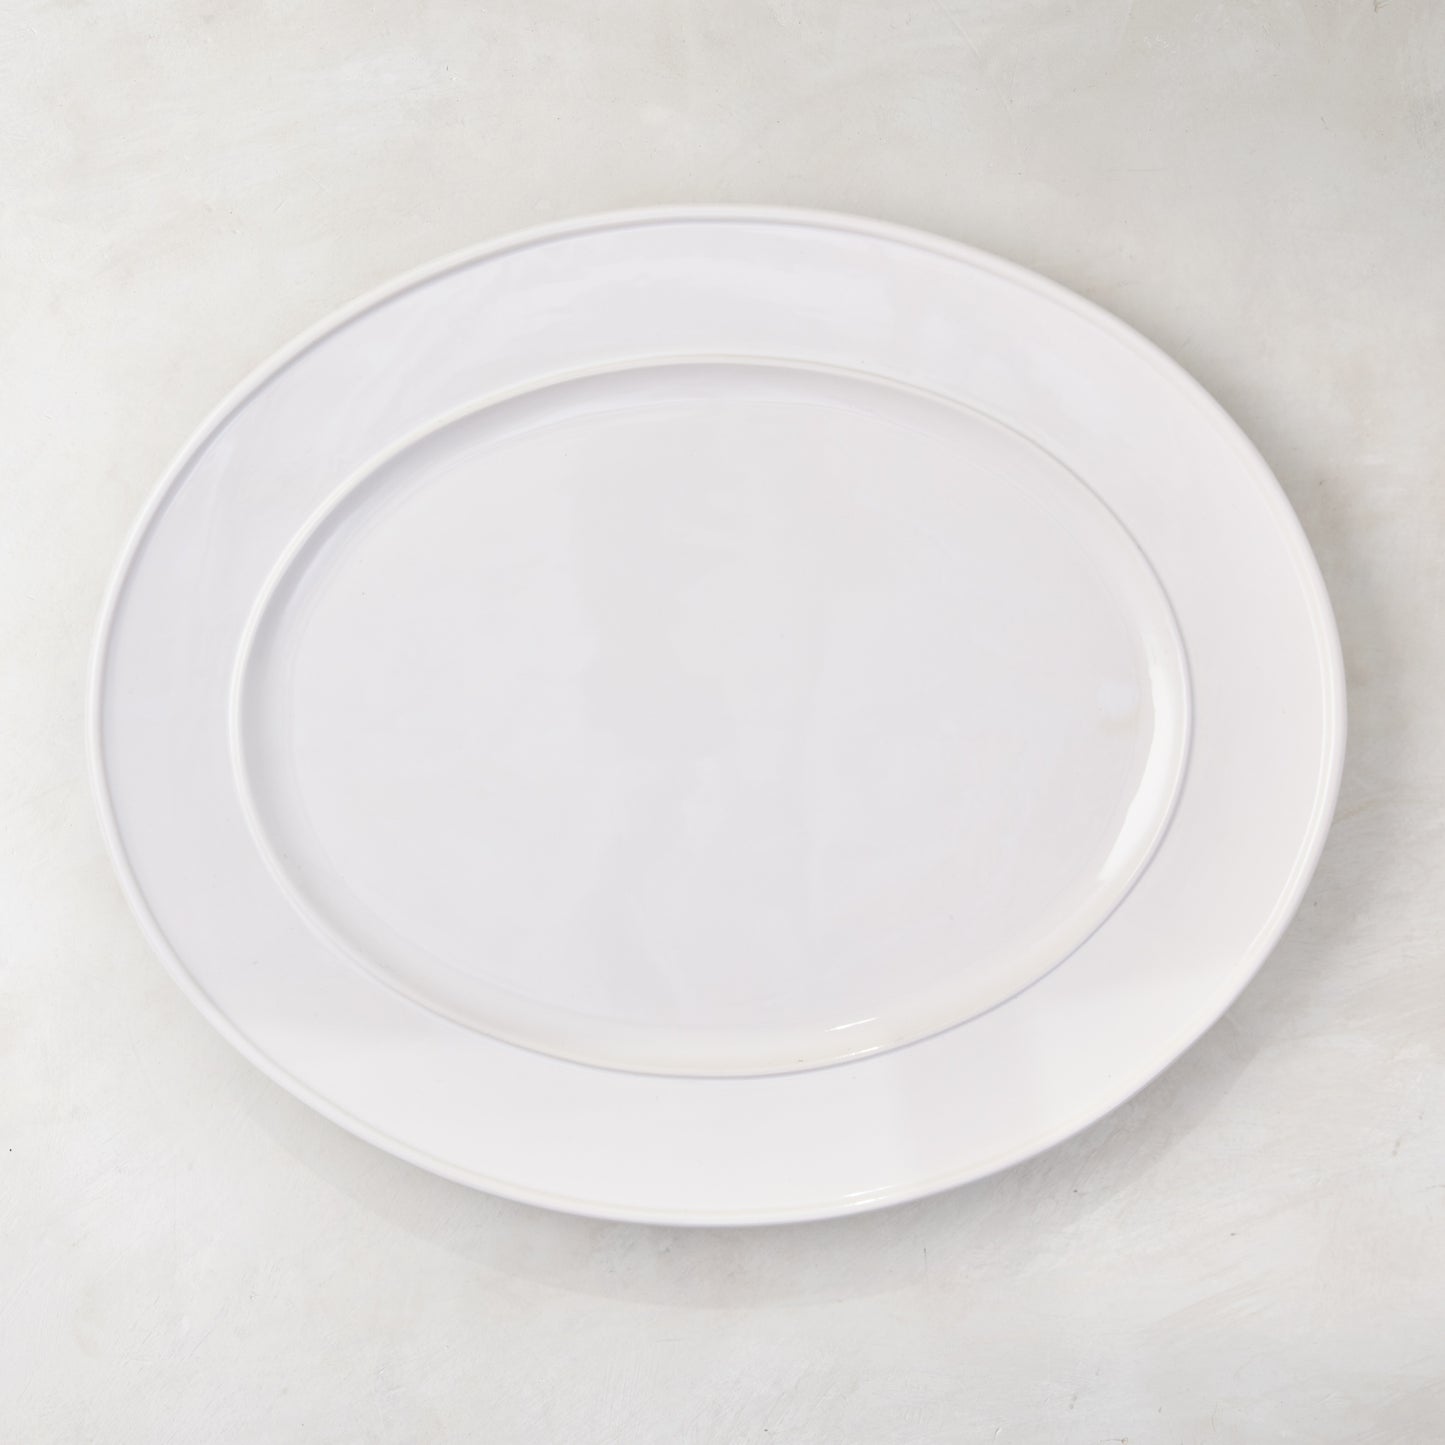 Bolinas Oval Ceramic Serving Platter with Trim